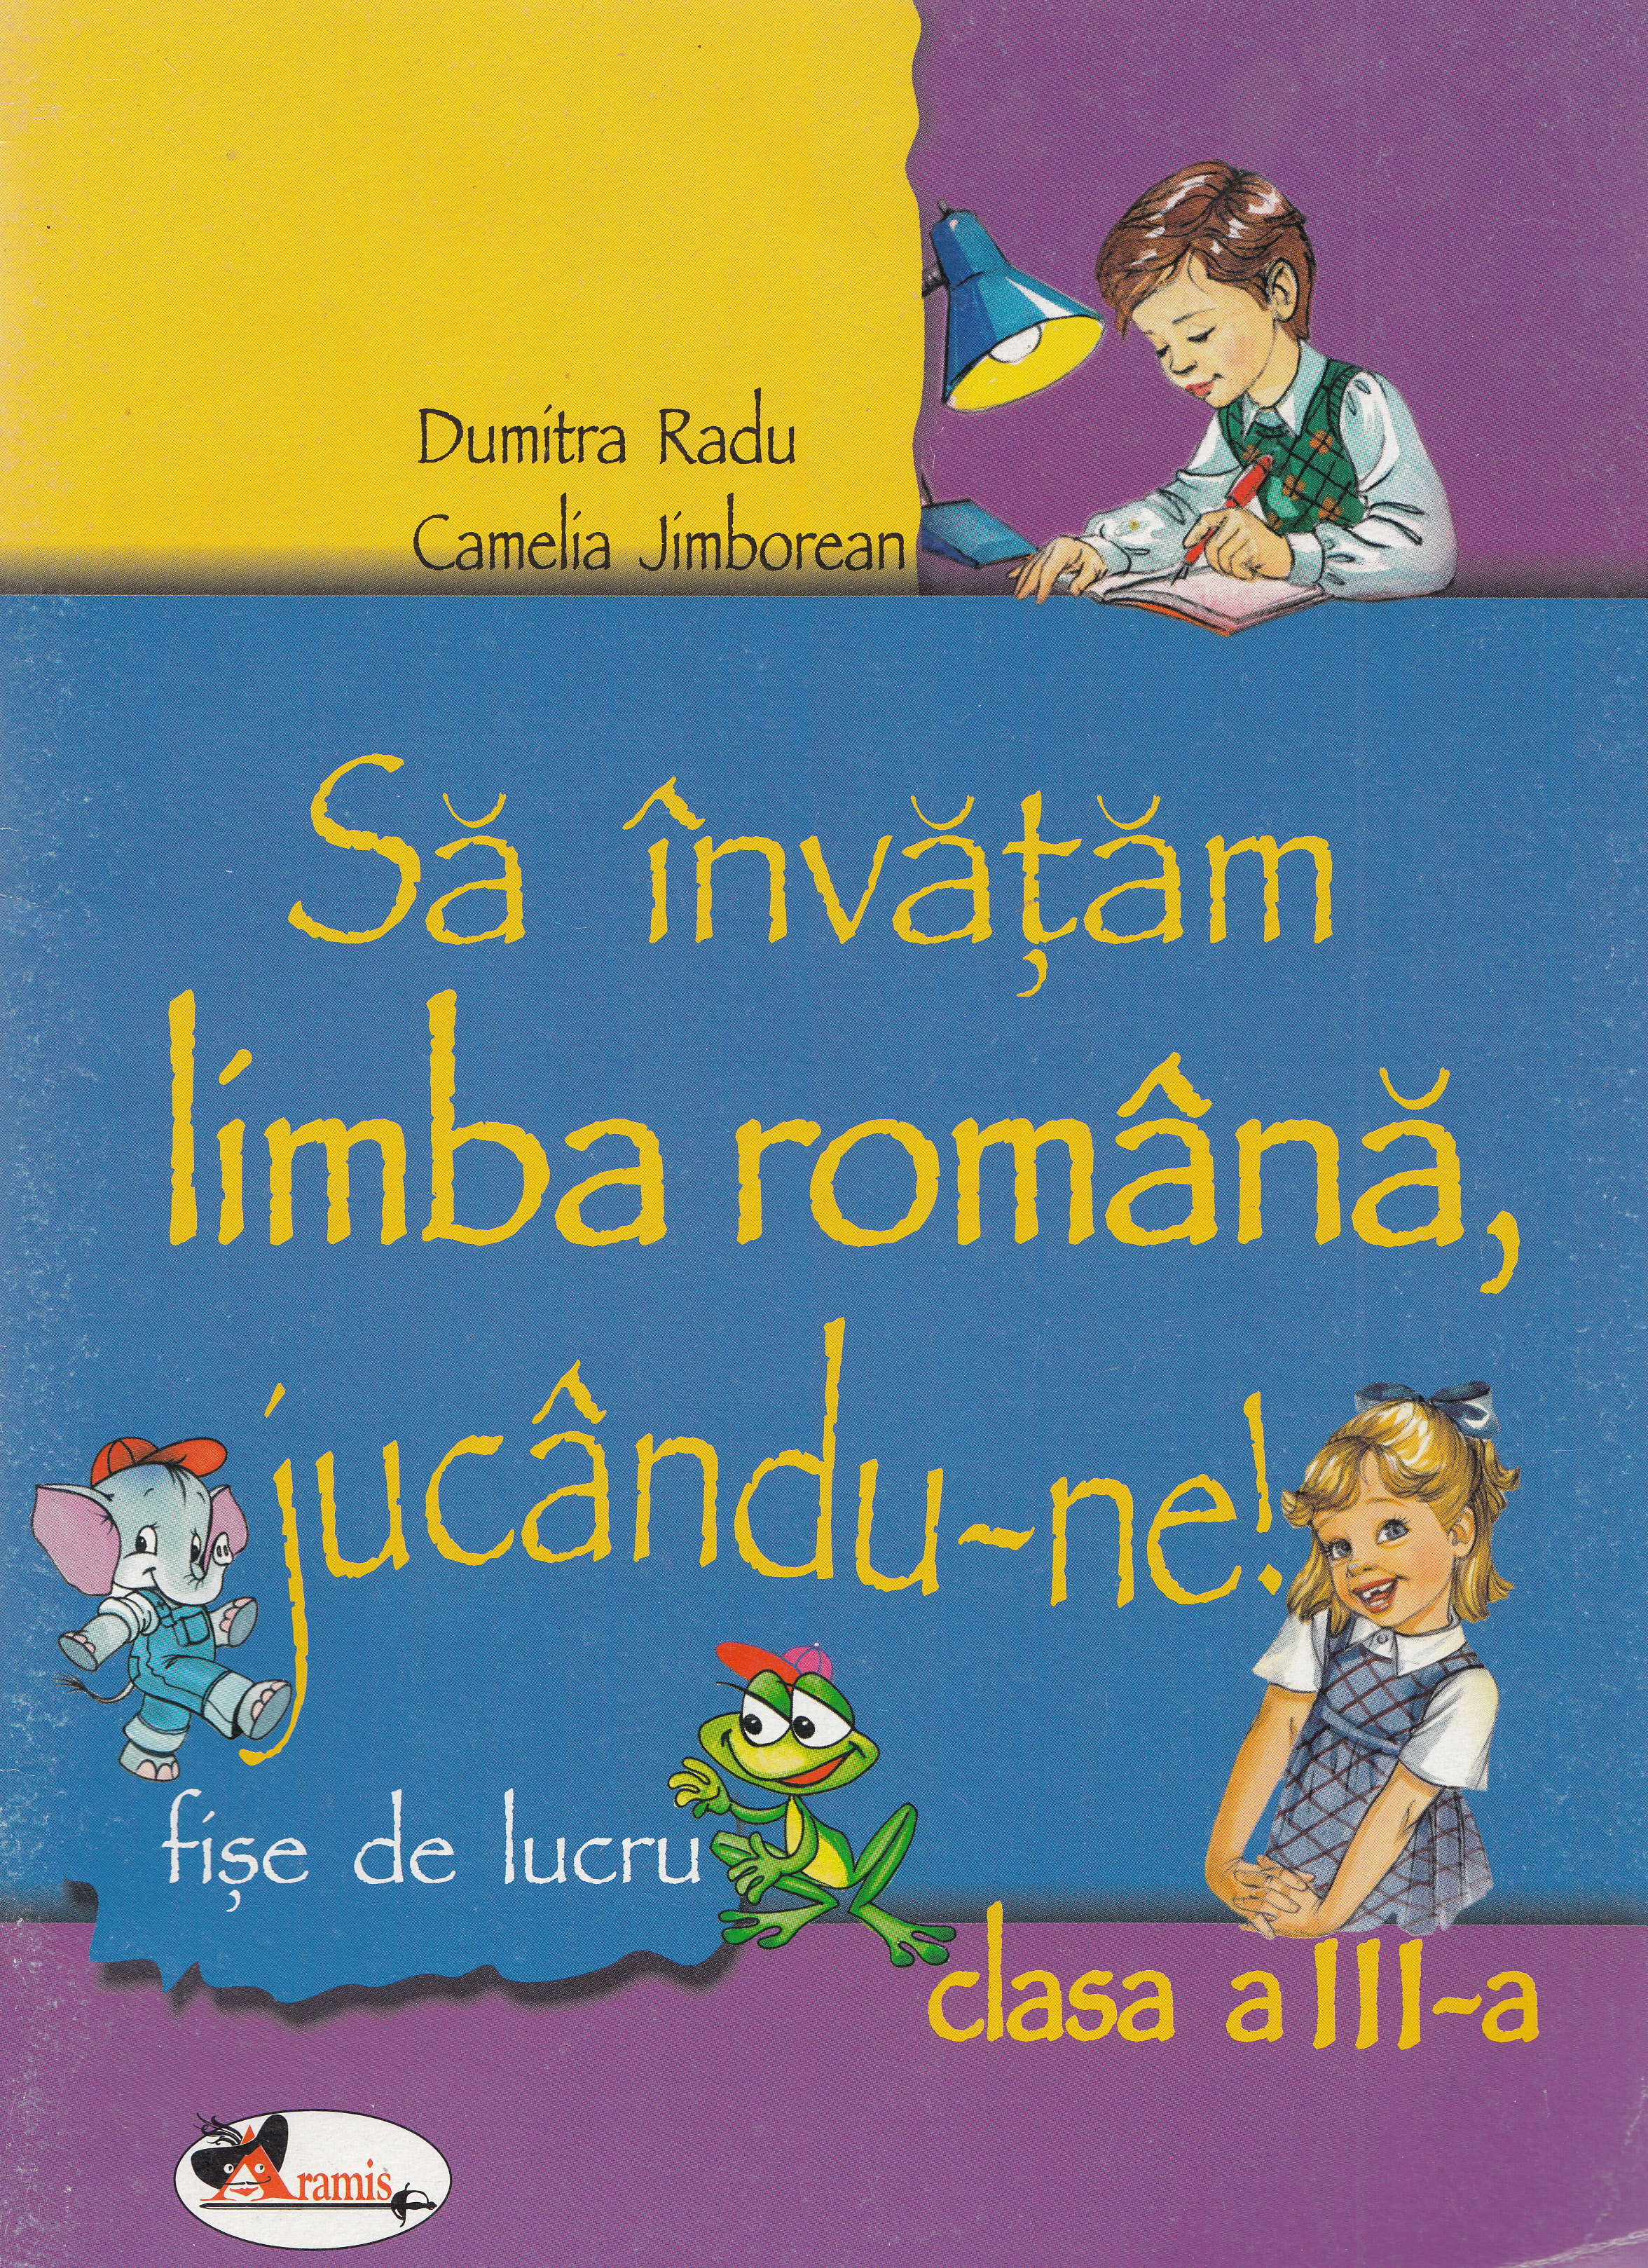 Sa invatam limba romana, jucandu-ne! - Clasa 3 - Fise de lucru - Dumitra Radu